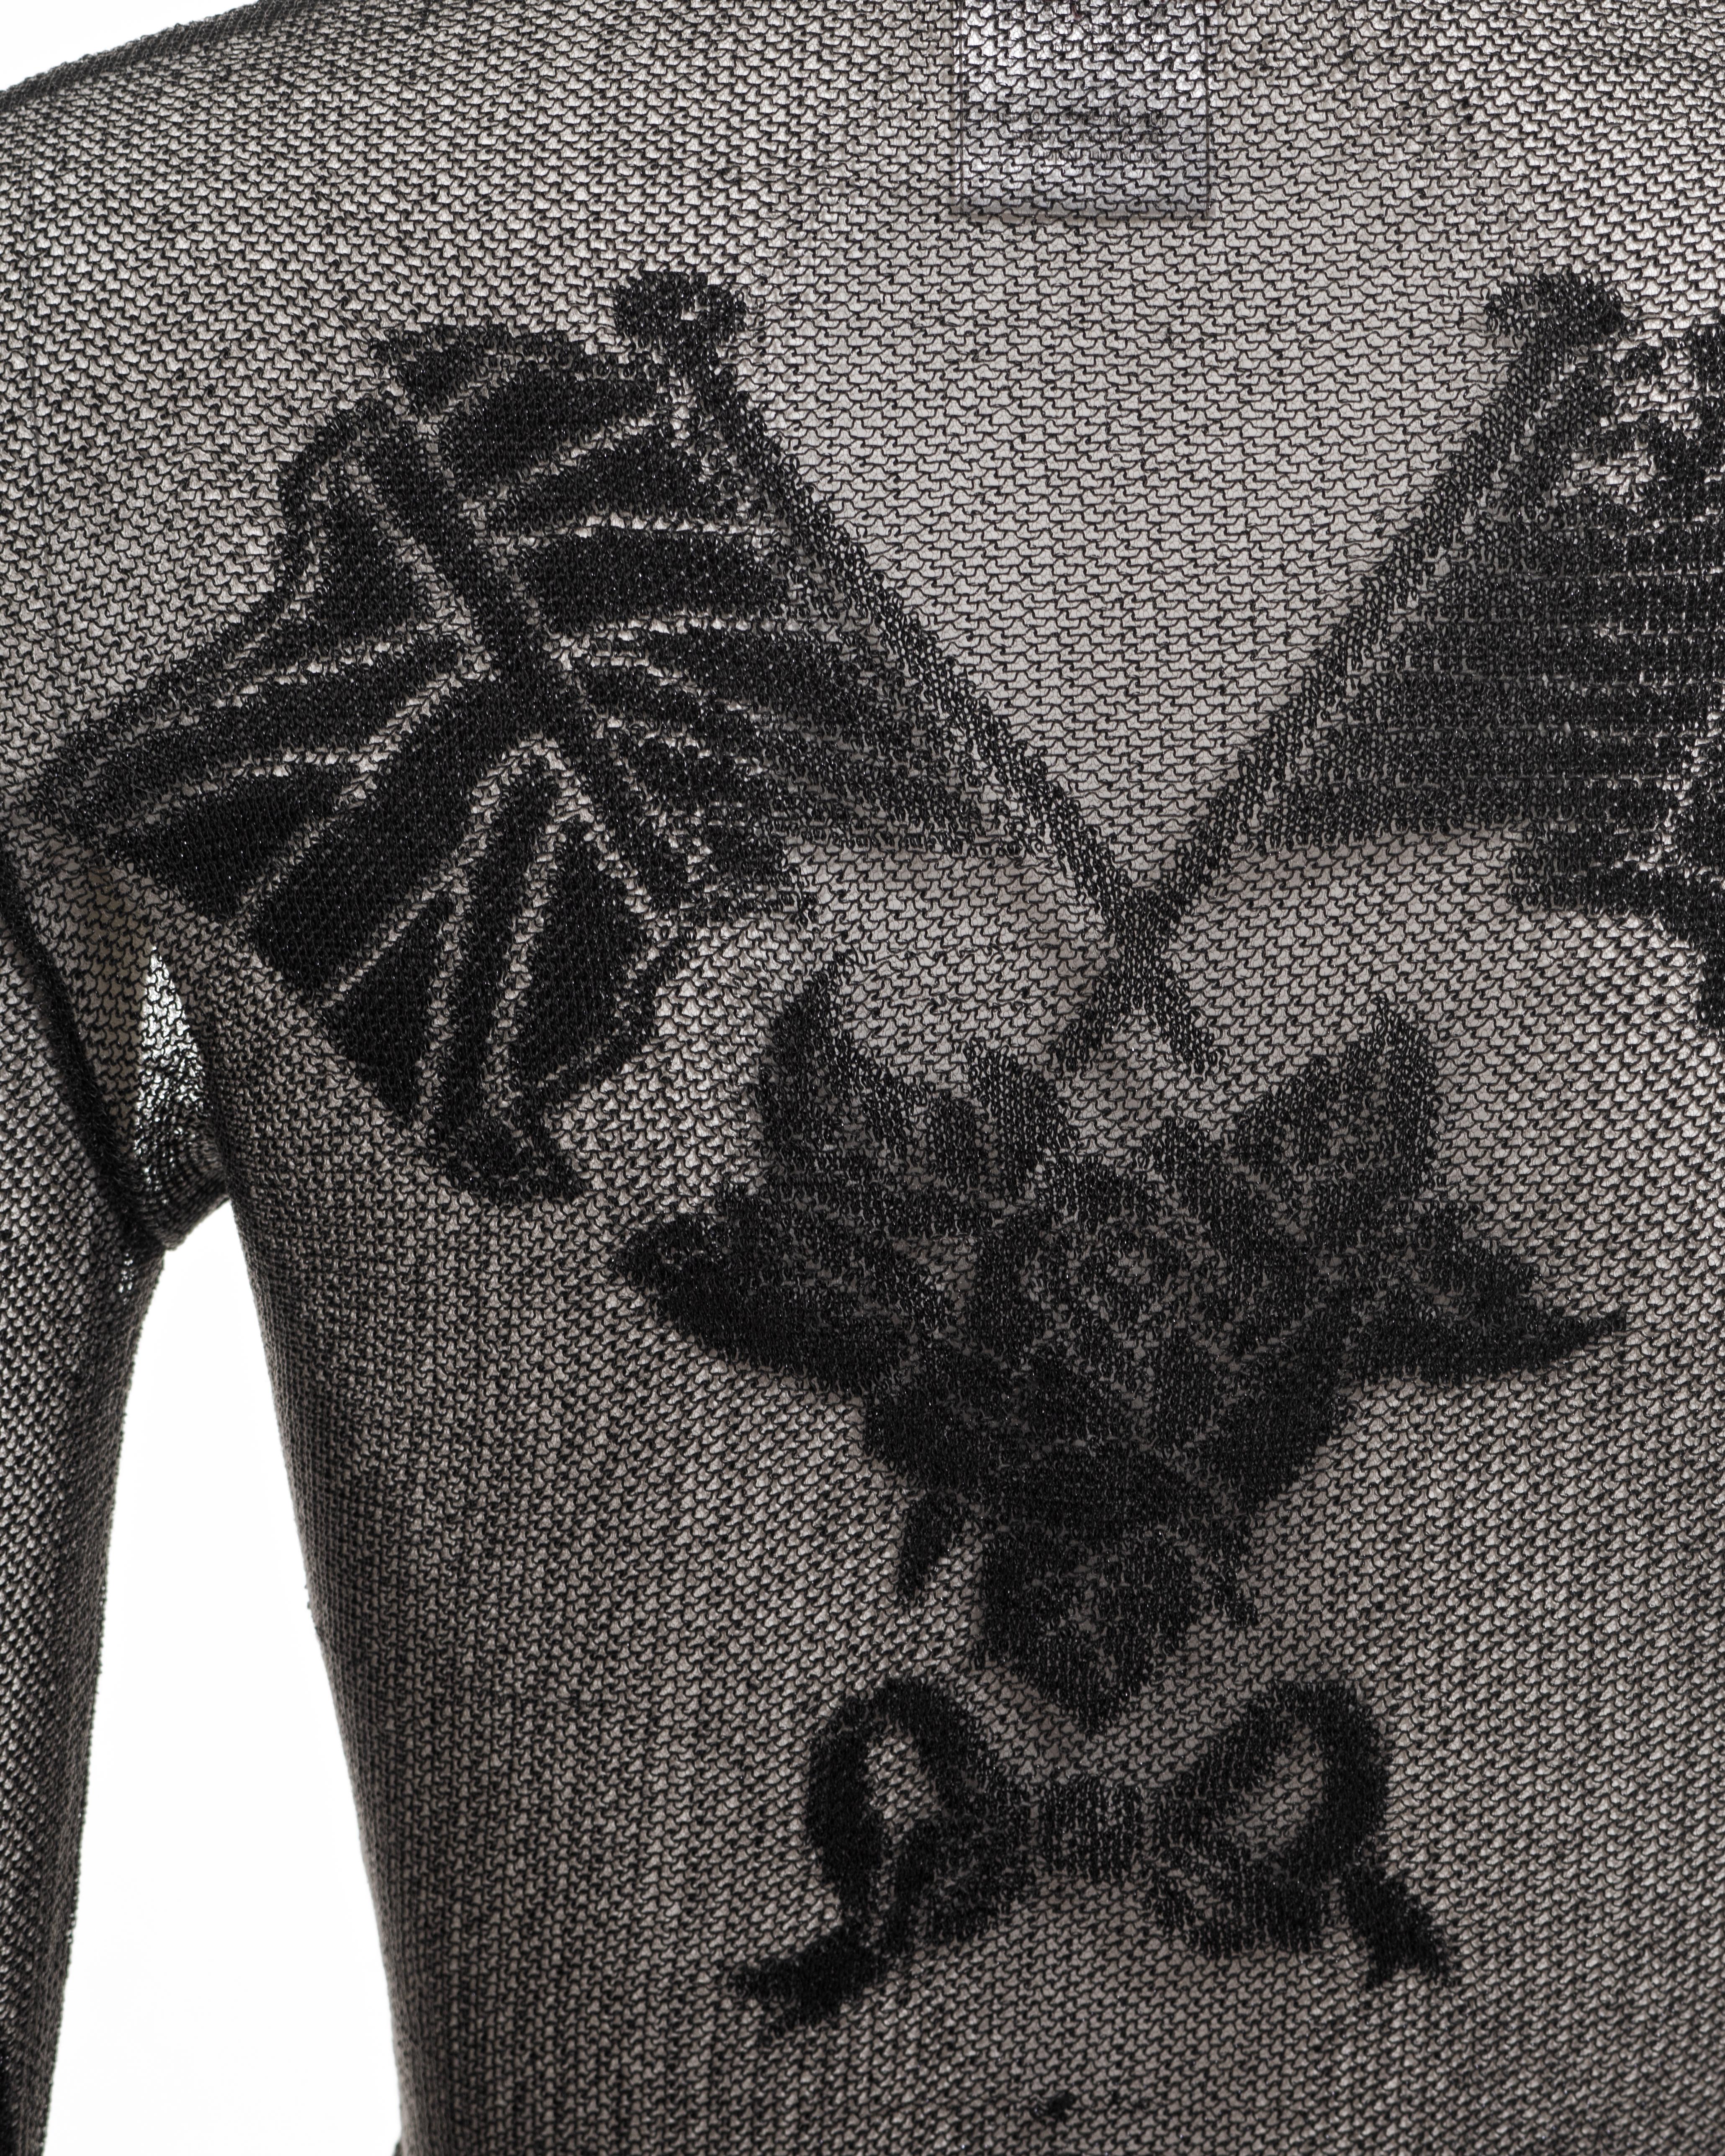 John Galliano black mesh top with tattoo motifs, fw 1997 For Sale 10